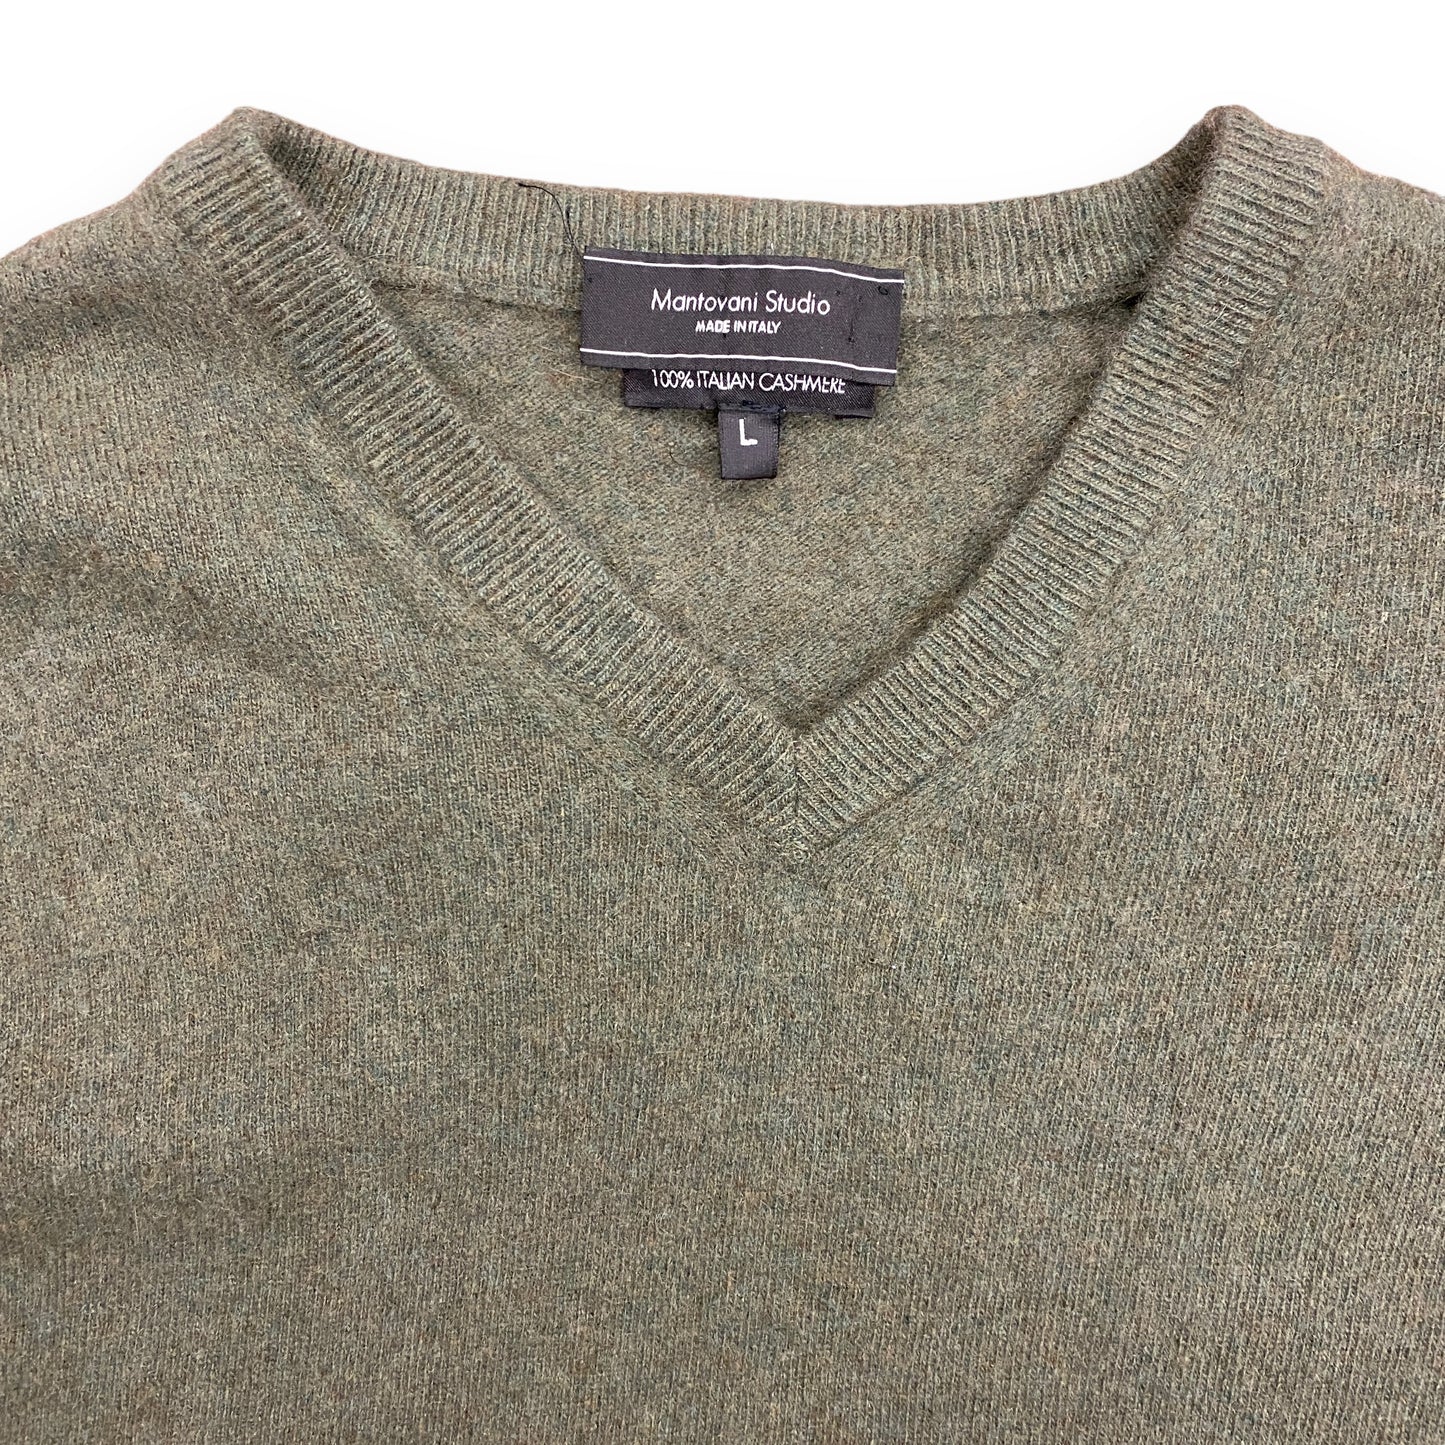 Mantovani Studios Italian Cashmere Olive Green Sweater - Size Large